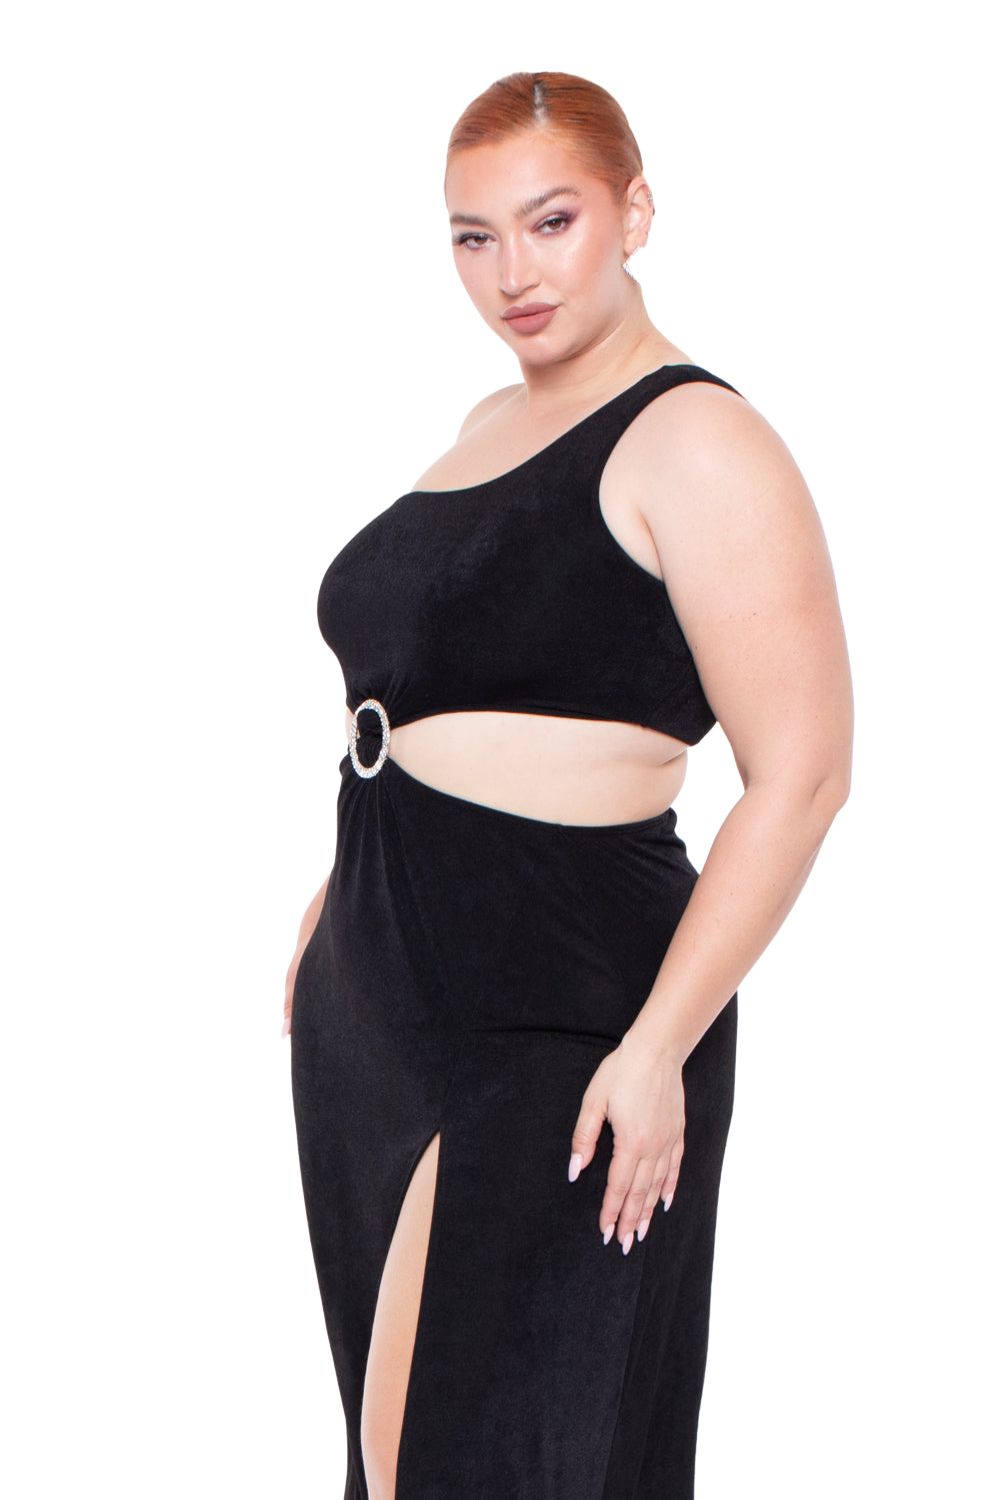 Curvy Sense Dresses Plus Size Kateri Cut Out Dress- Black